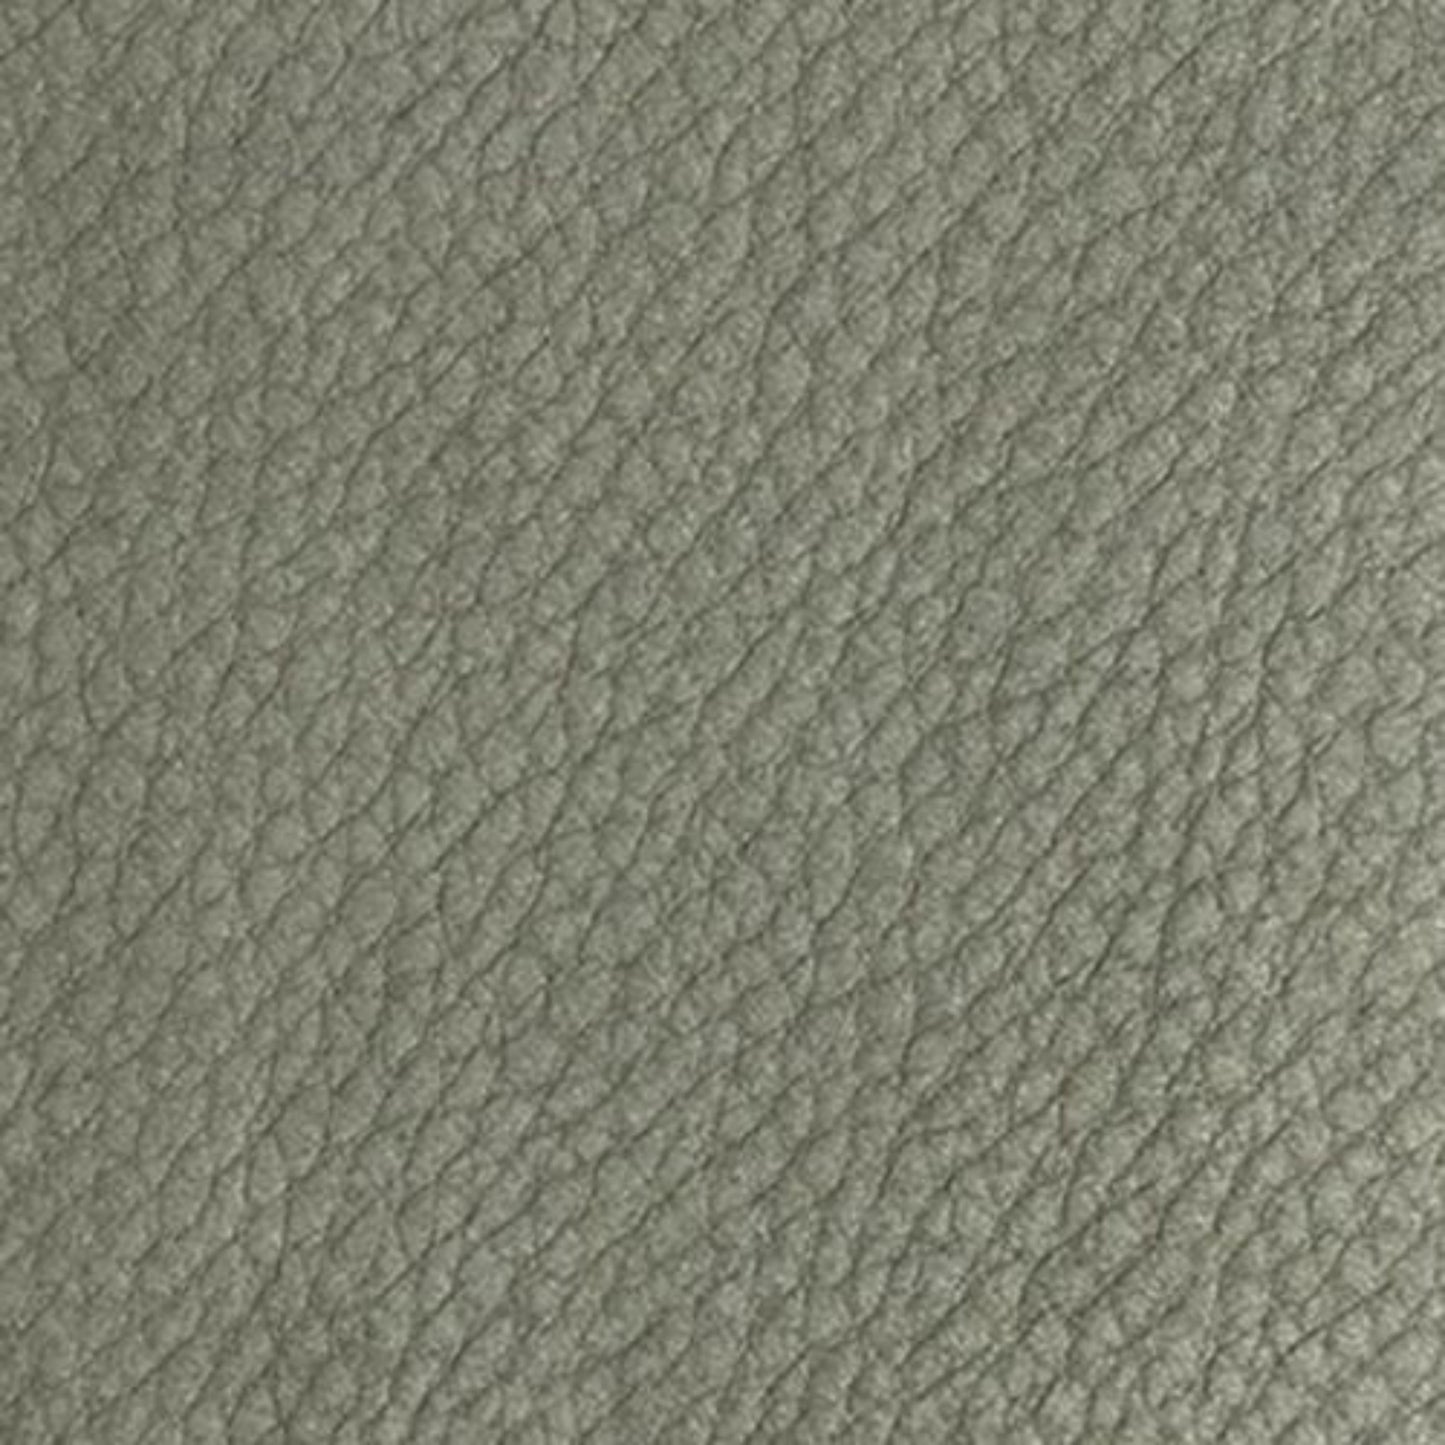 Comfy green top grain half leather sofa